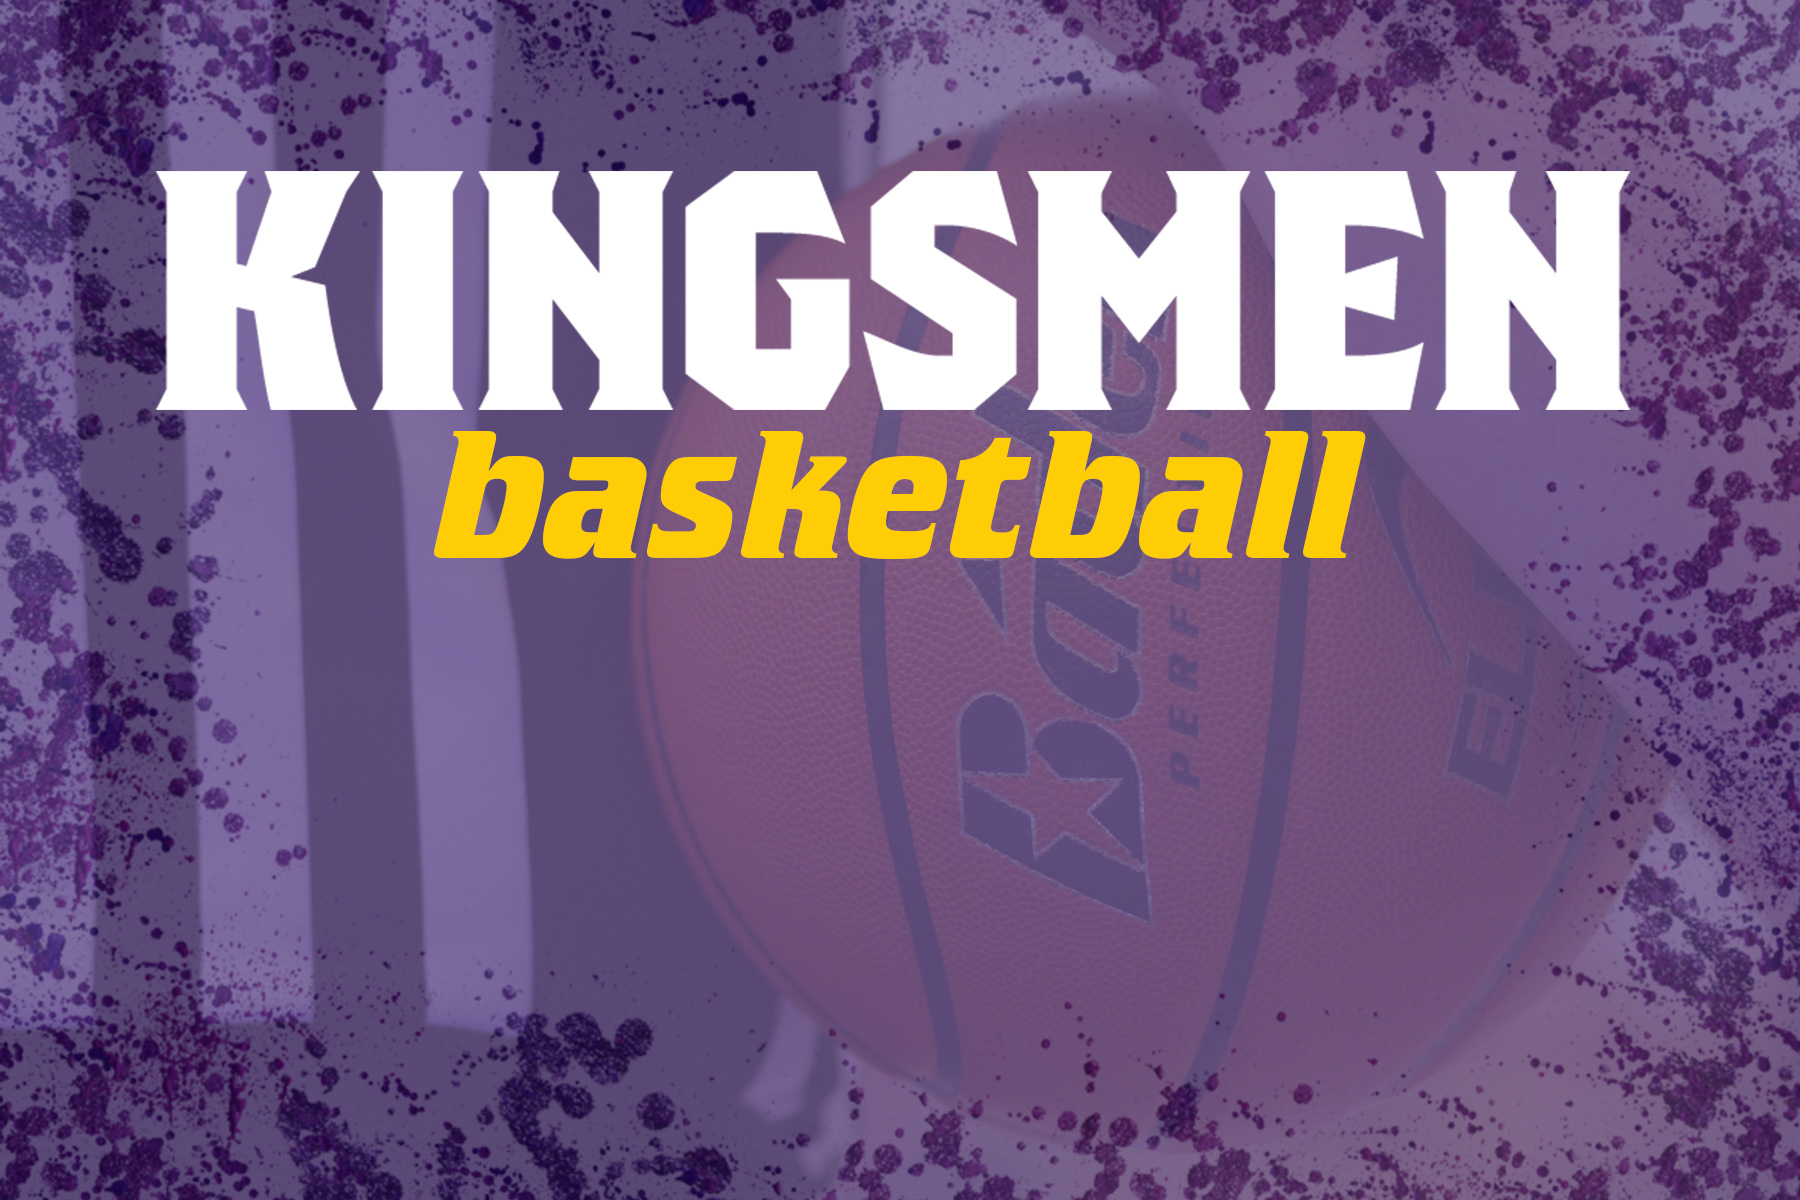 Kingsmen Announce 2017-18 Basketball Schedule